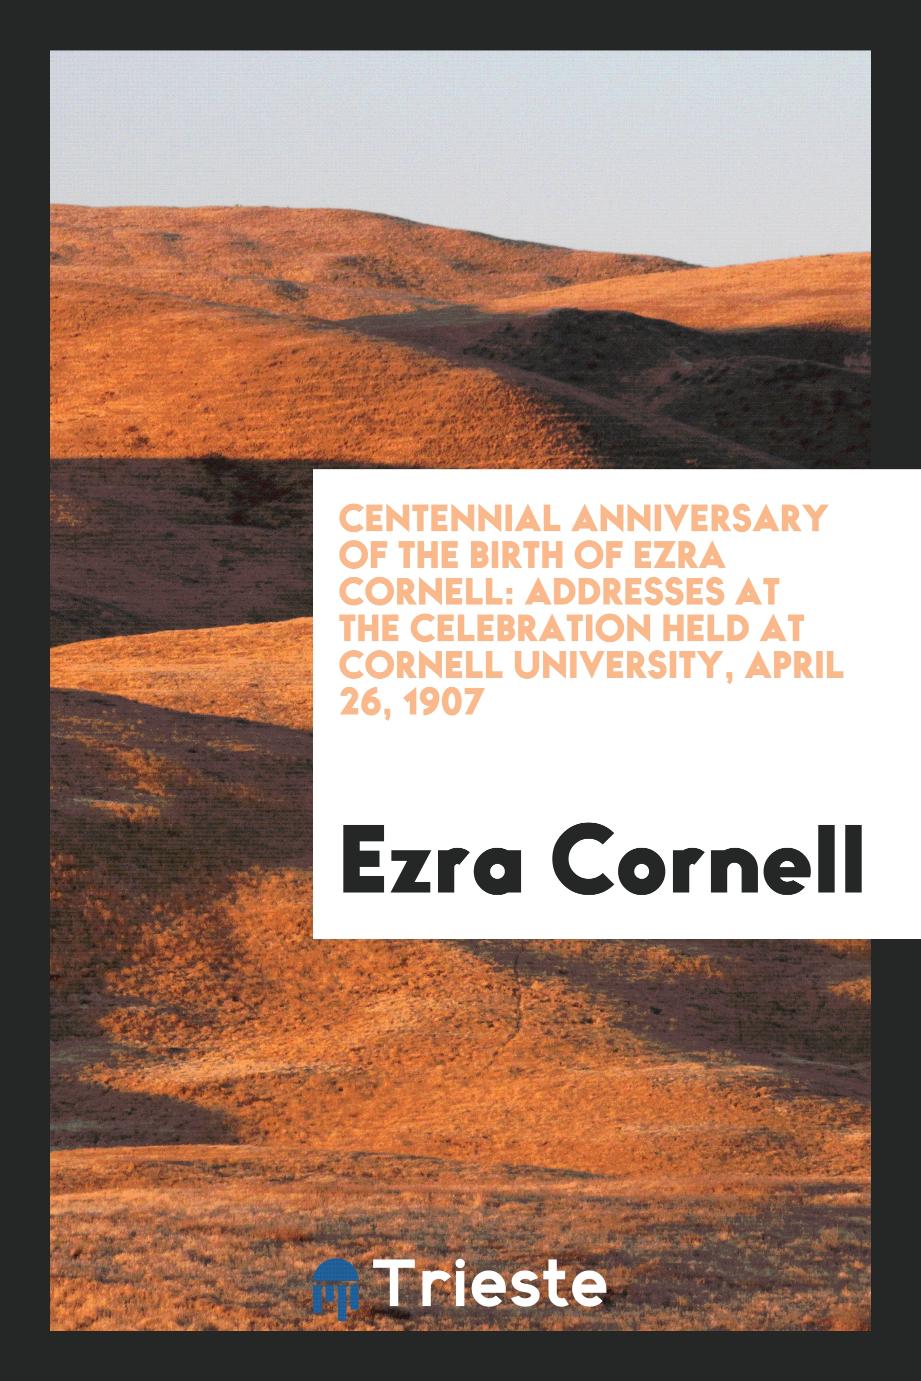 Centennial Anniversary of the Birth of Ezra Cornell: Addresses at the Celebration Held at Cornell University, April 26, 1907